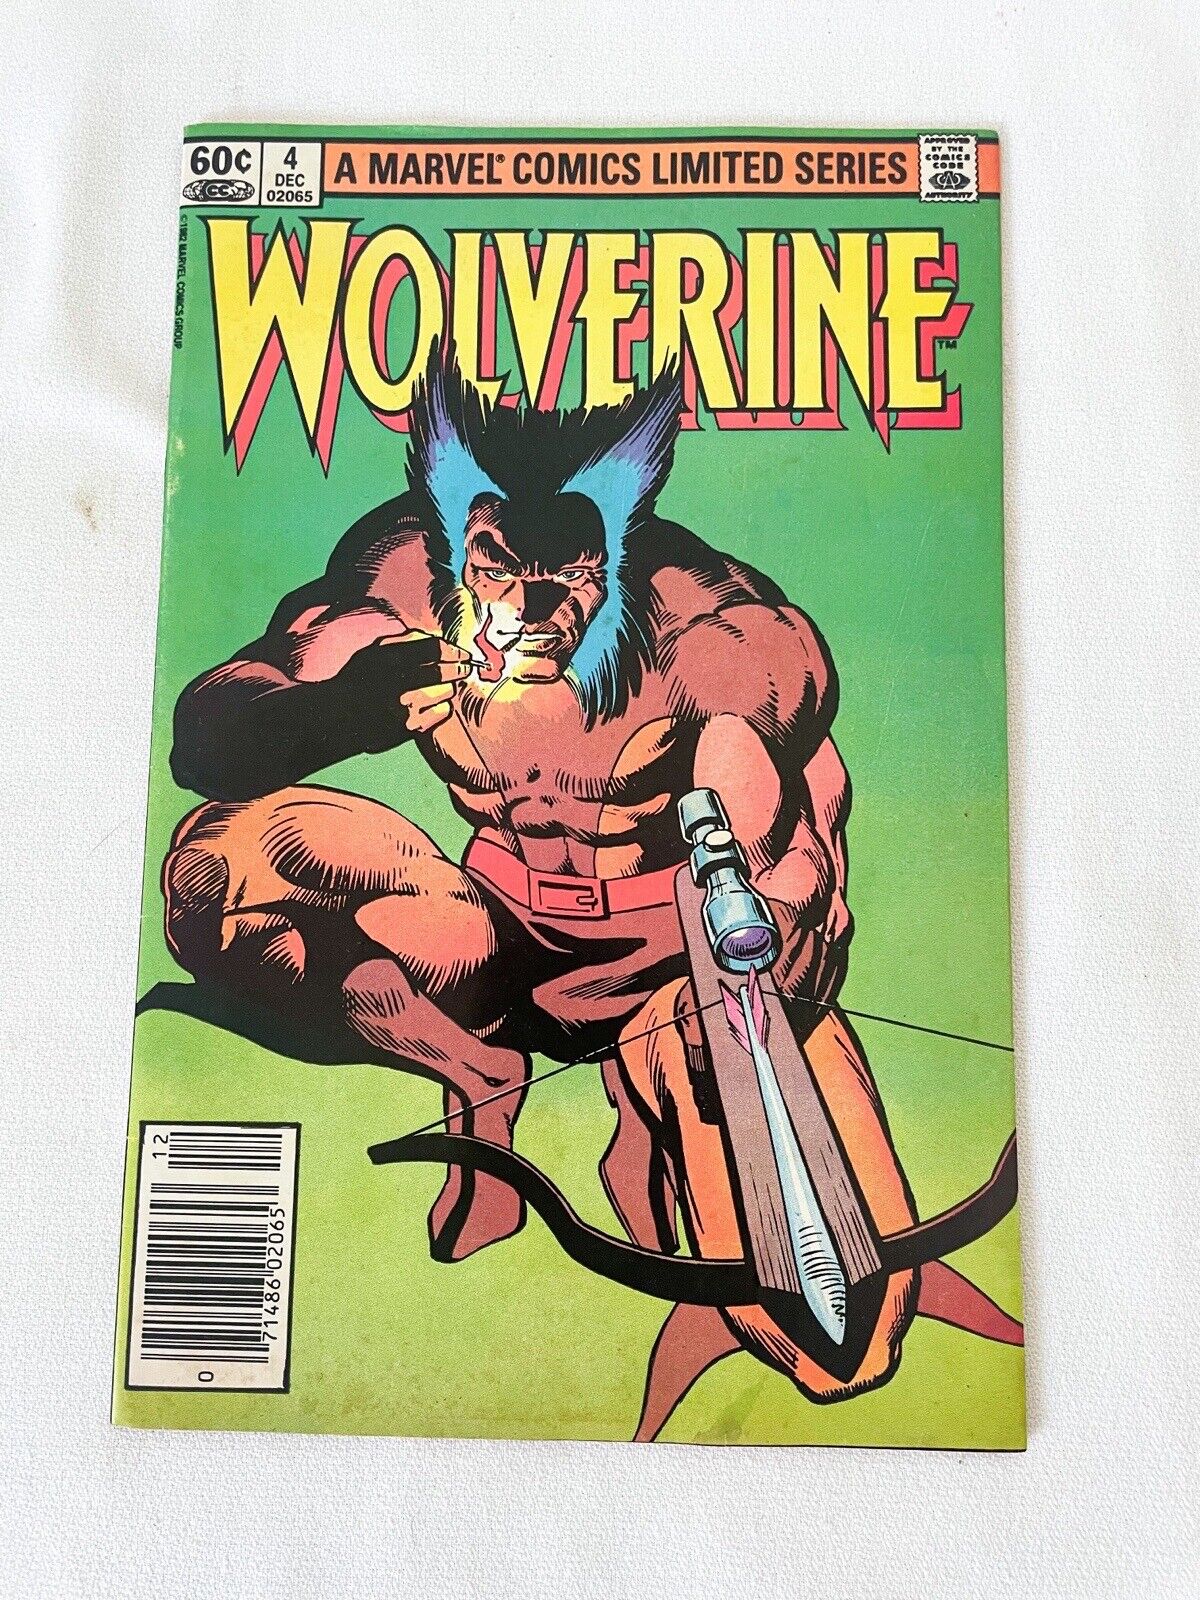 Vintage Wolverine #4 Dec 1982 Marvel Limited Series Comic Book Good Condition